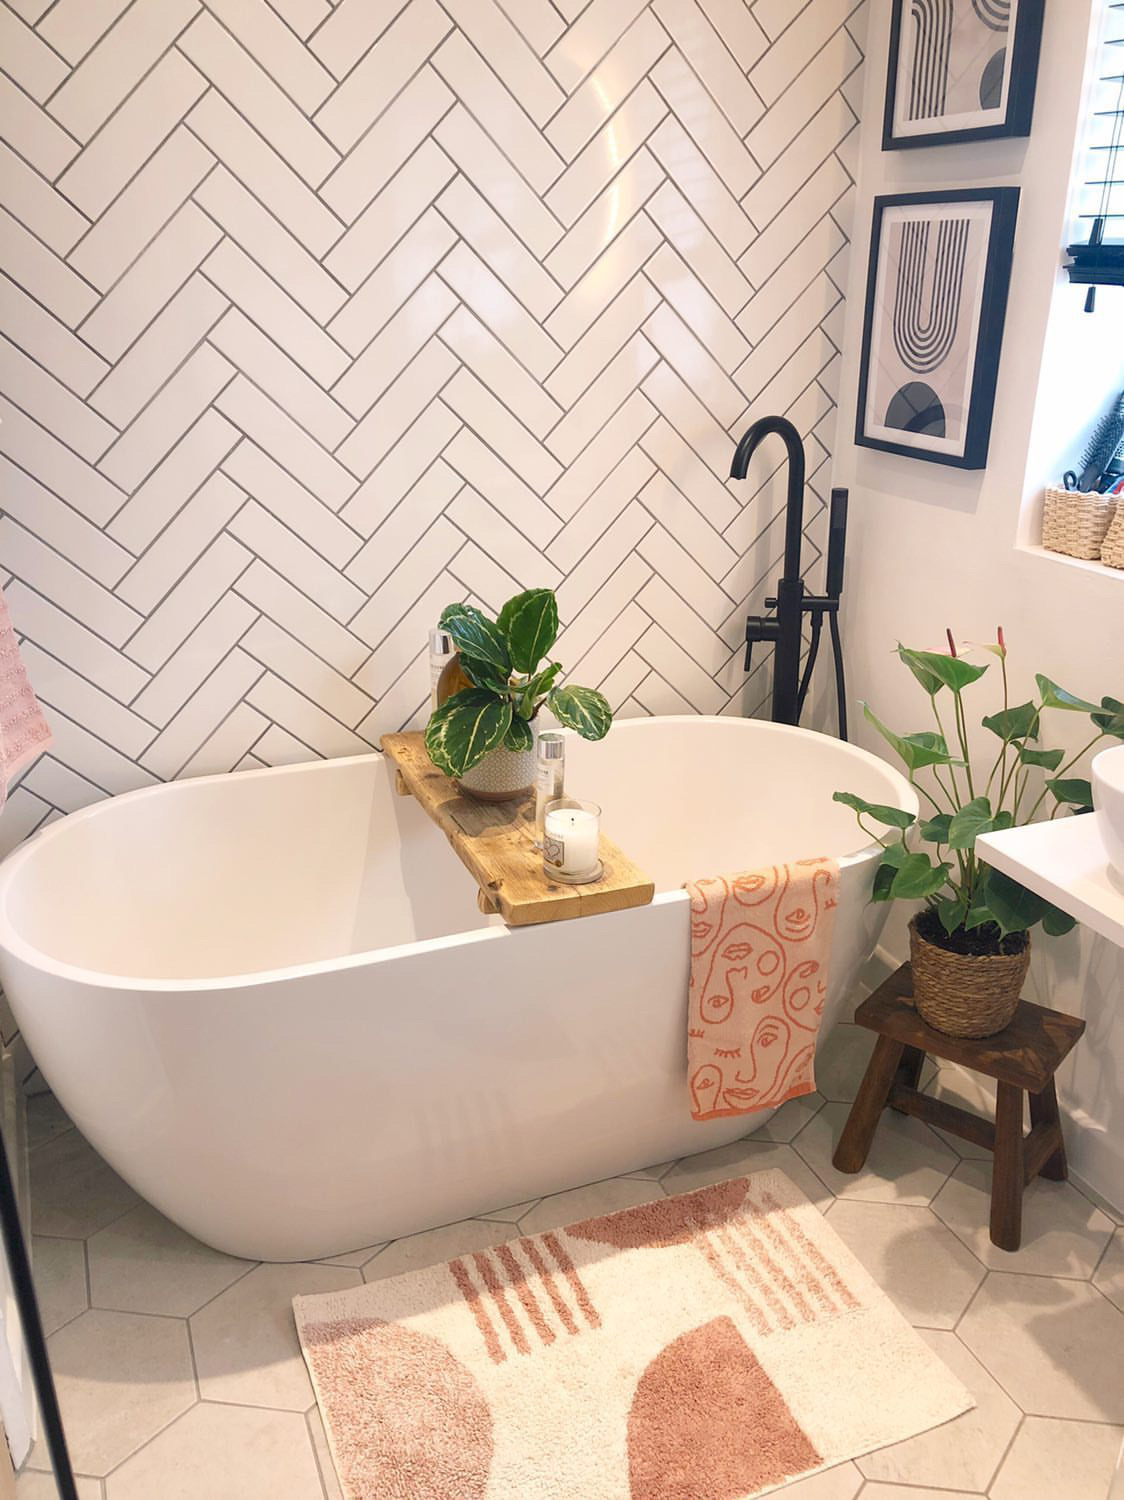 Reclaimed Barn Wood Bathtub Tray – Sharon M for the Home